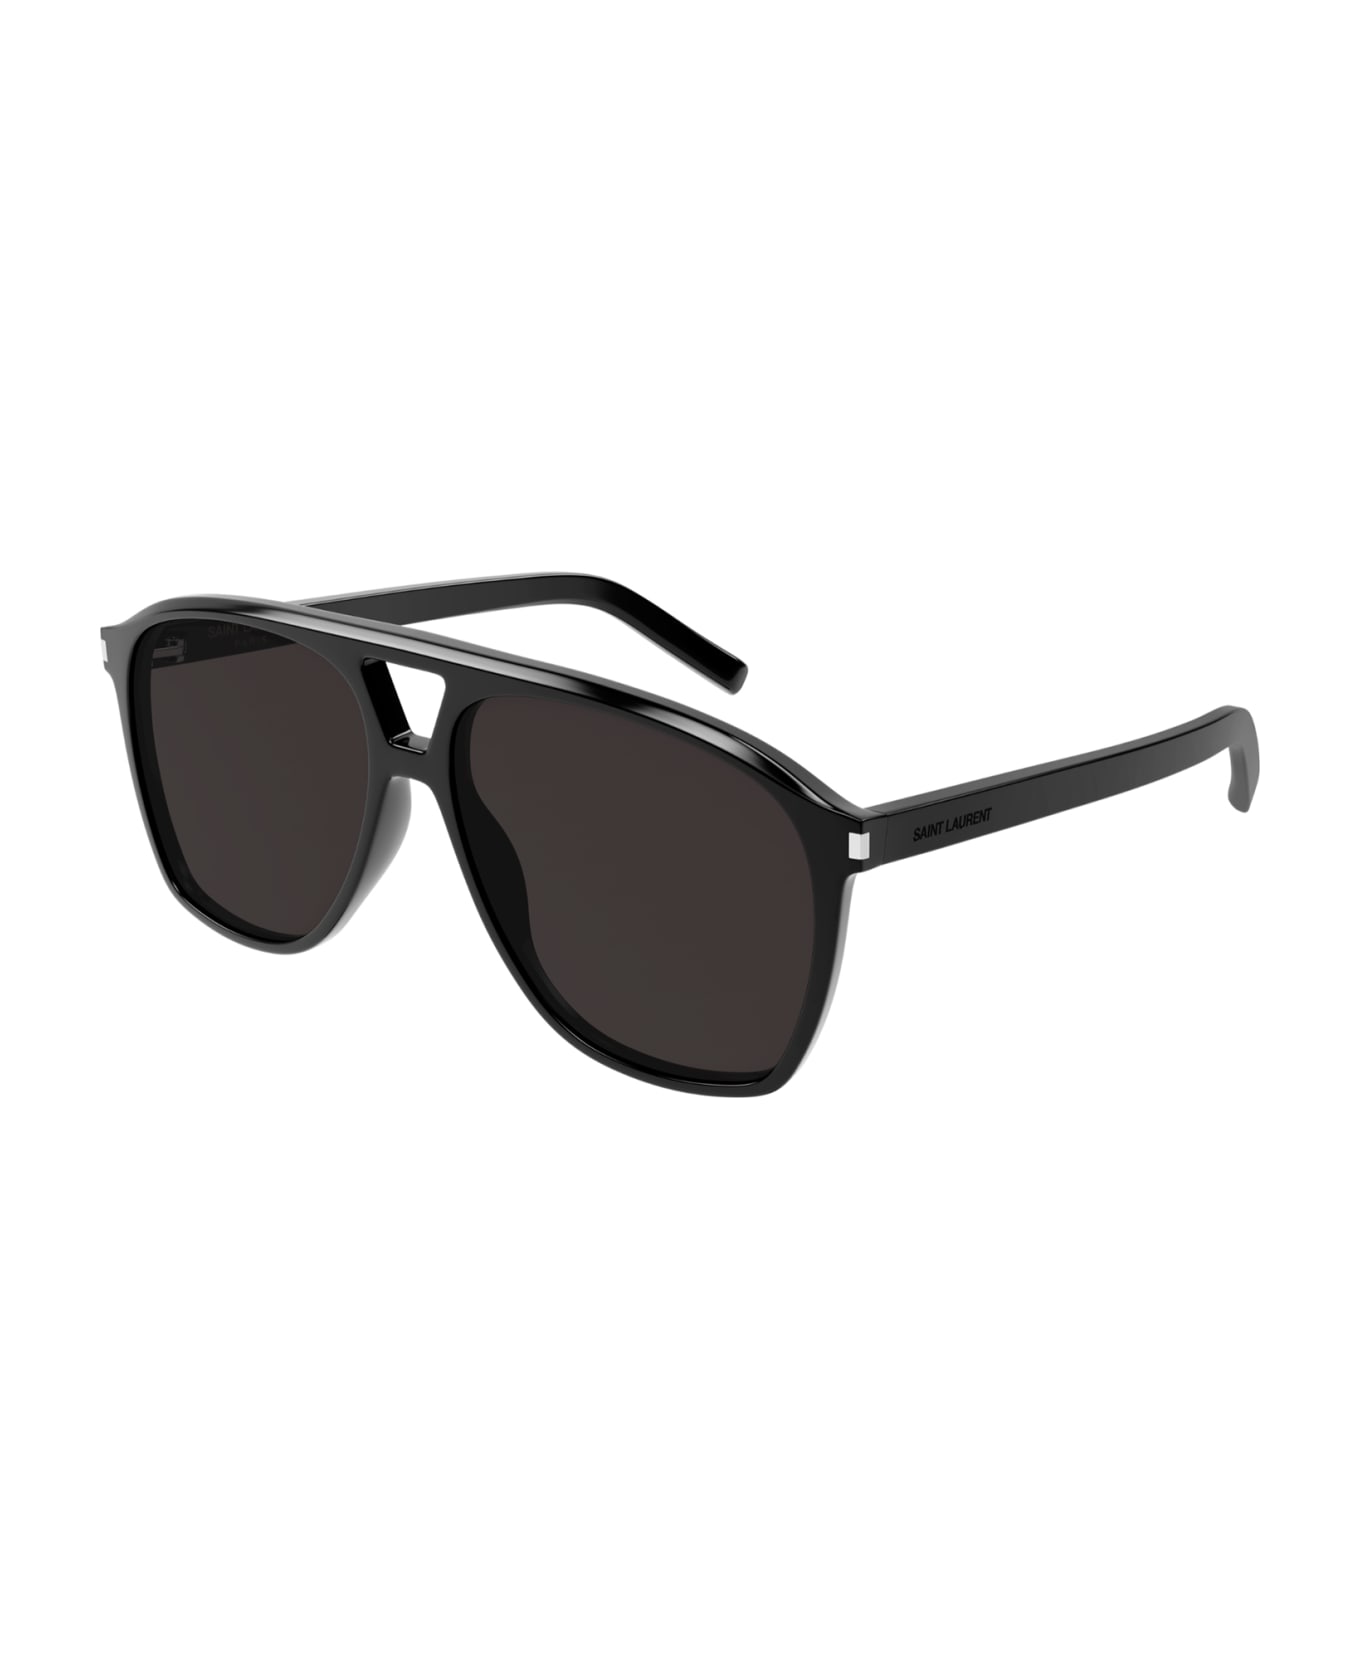 Saint Laurent Eyewear 1f944lg0a - Julbo Line Sunglasses